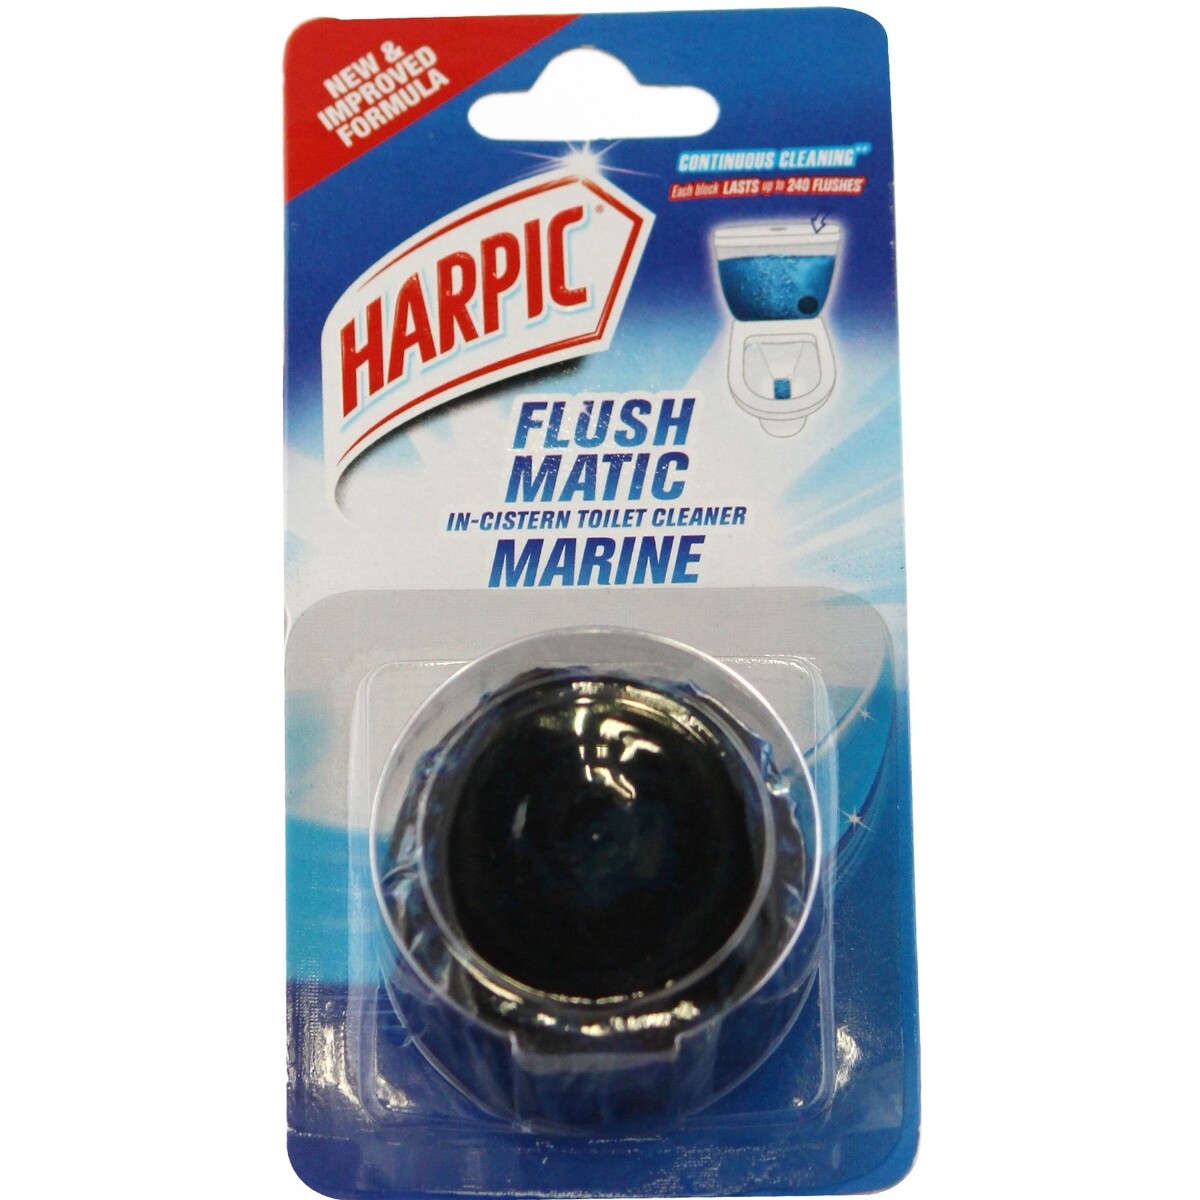 Harpic Flushmatic Marine 50g